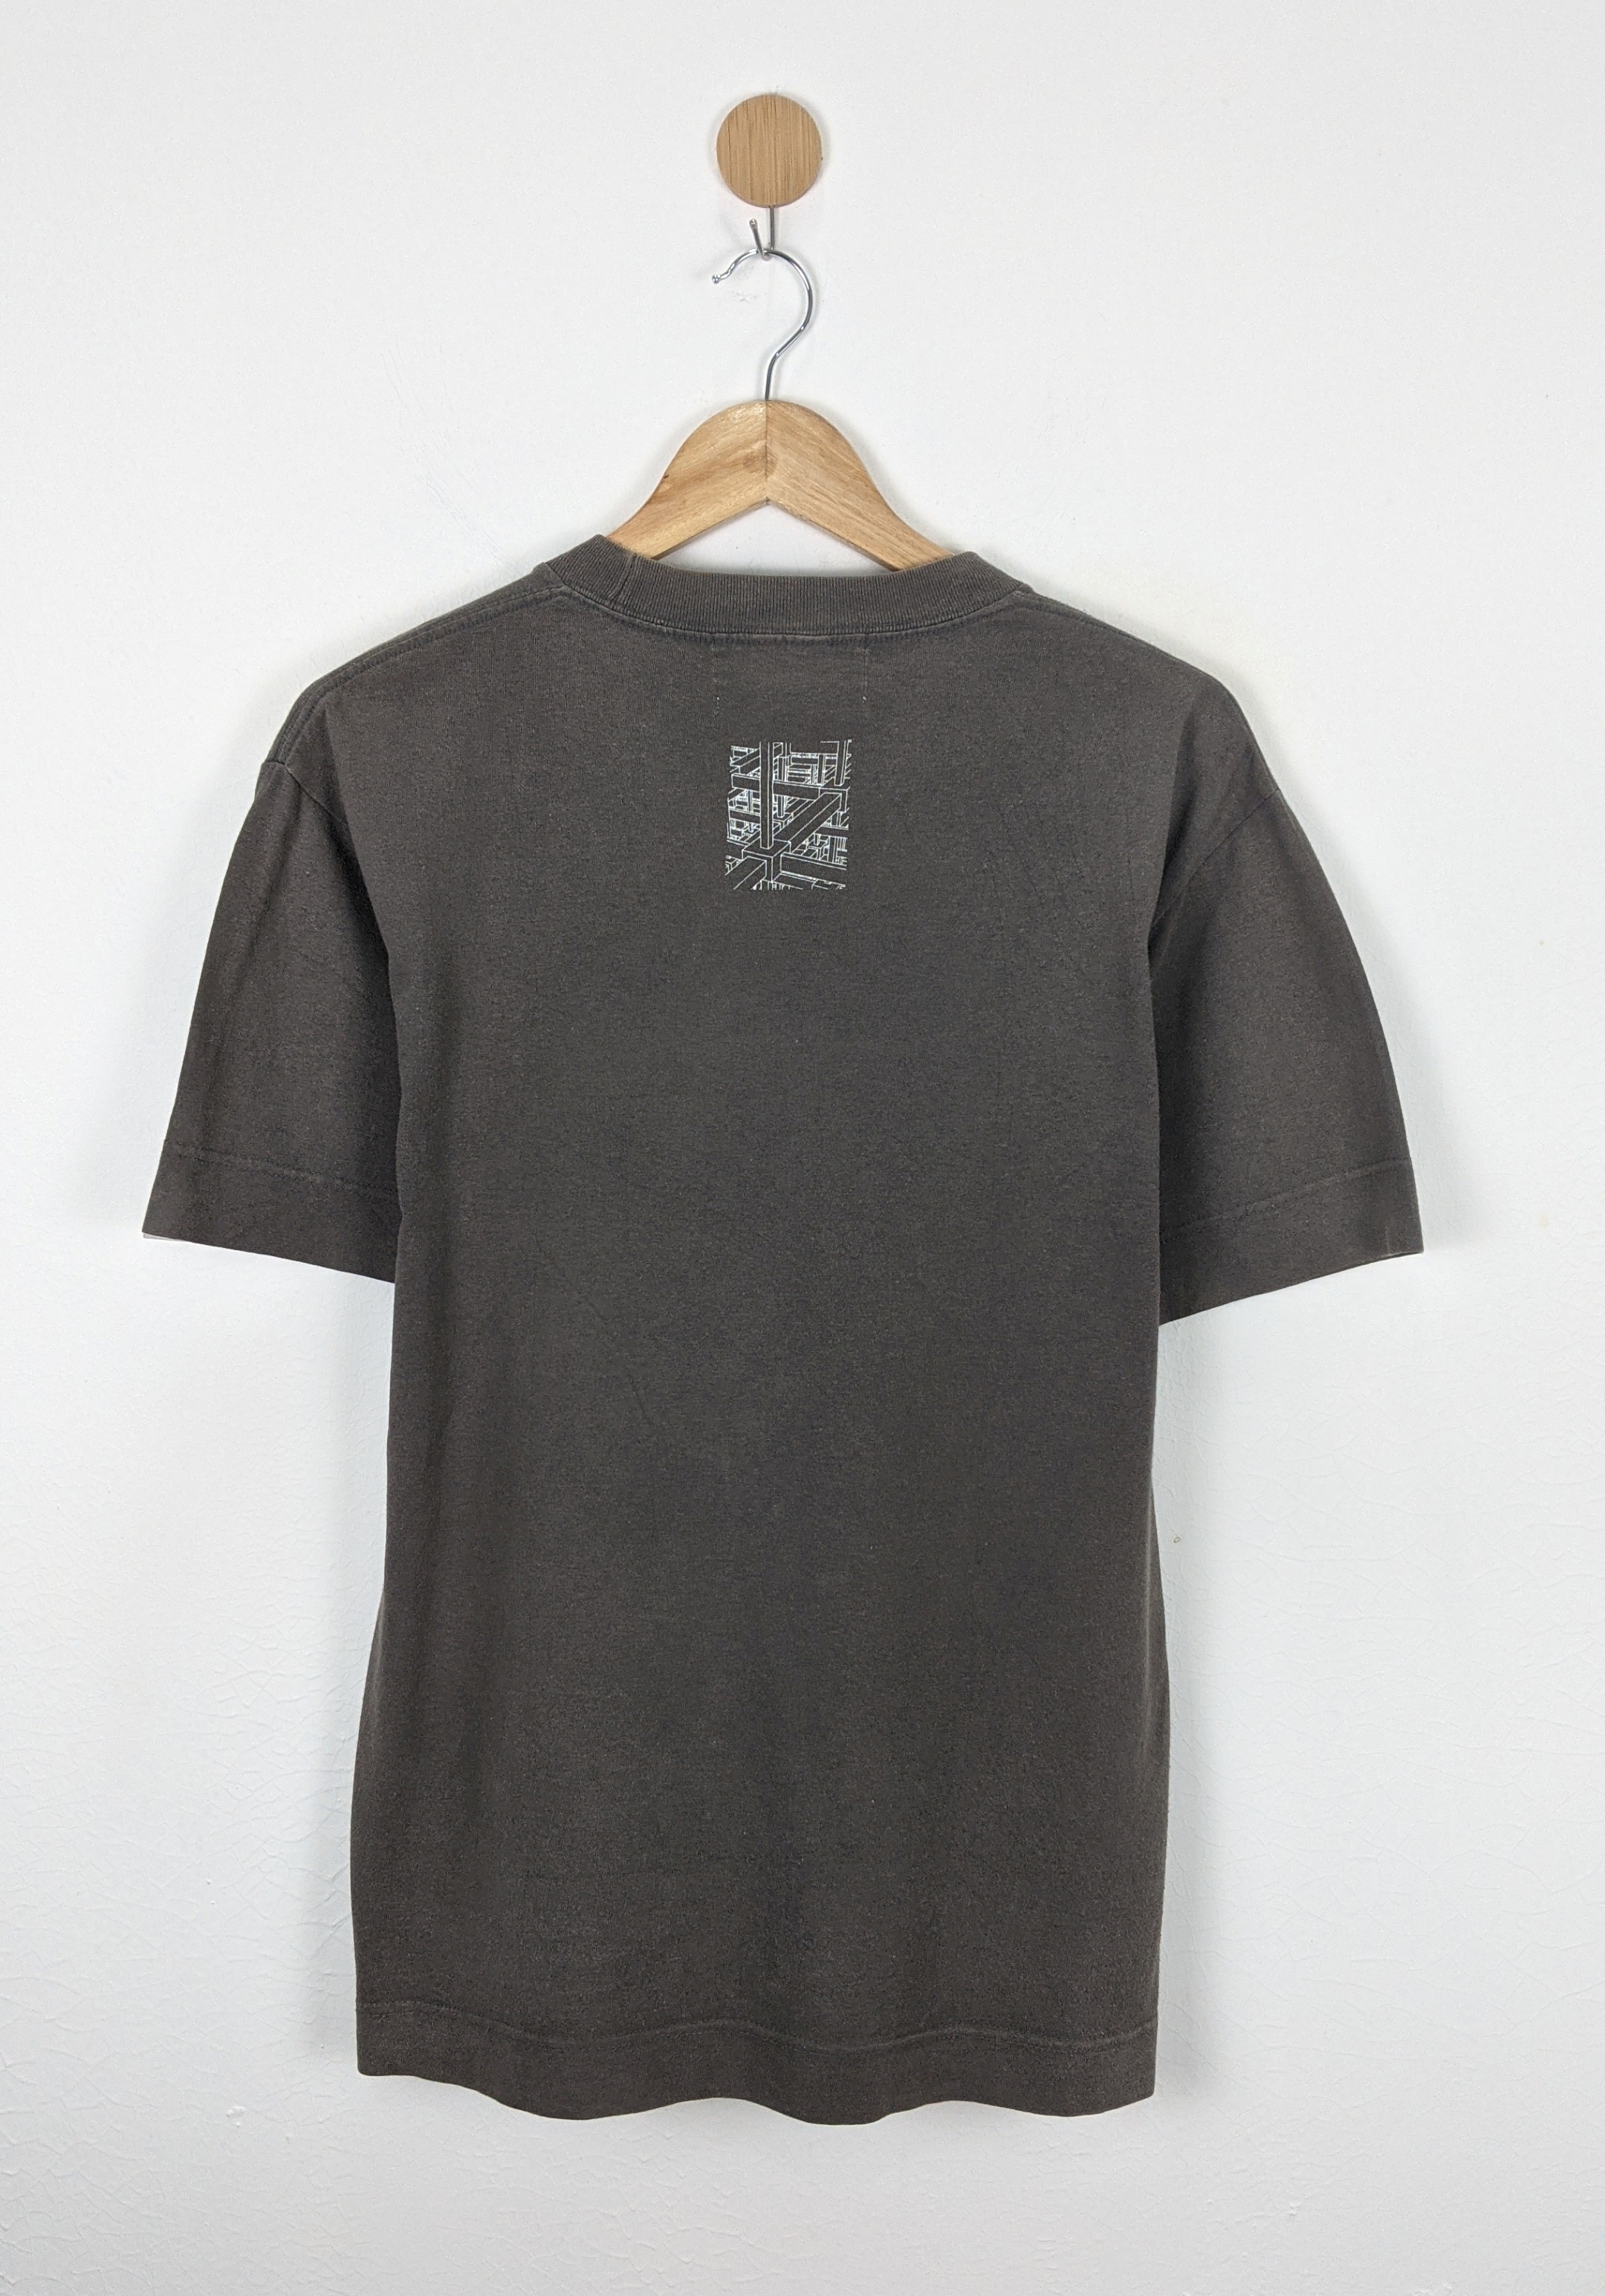 General Research 2001 shirt - 3